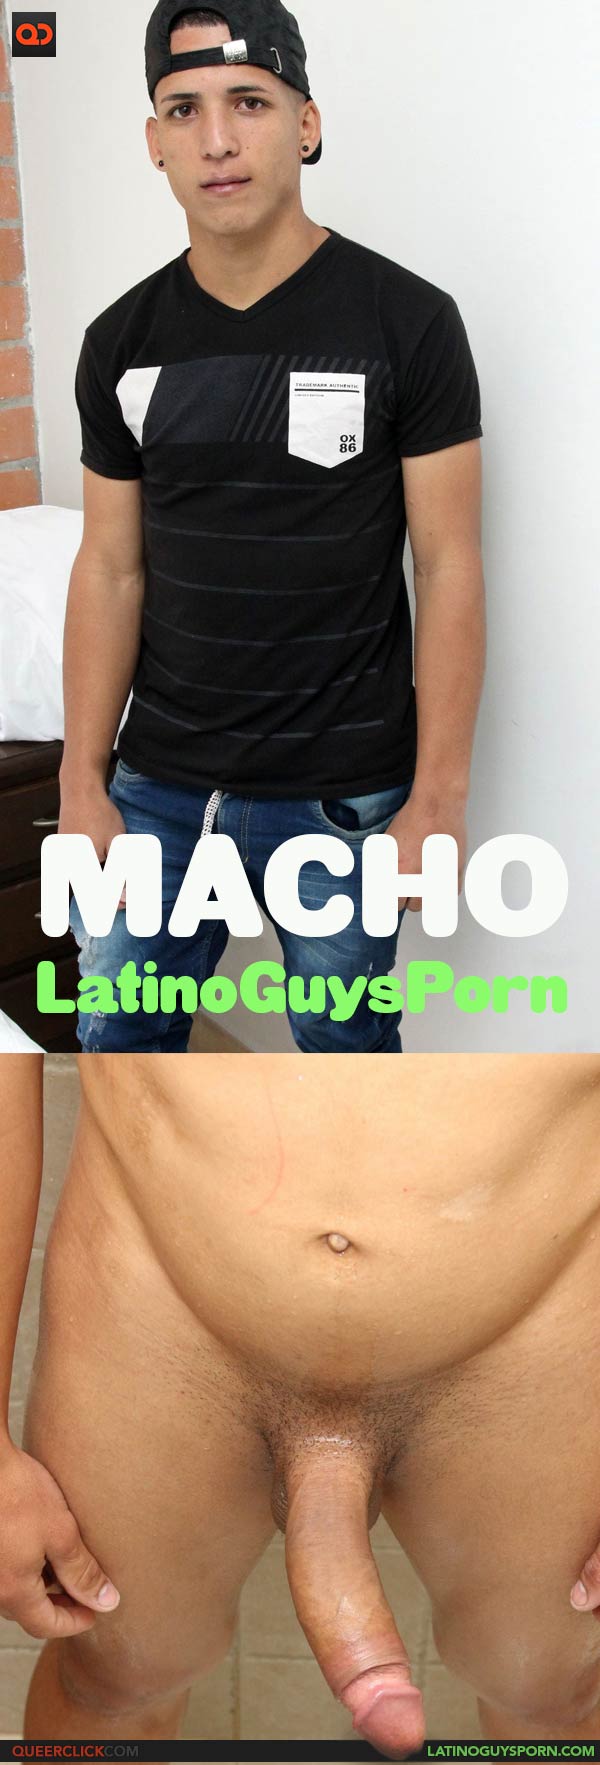 Latino Guys Porn: Macho